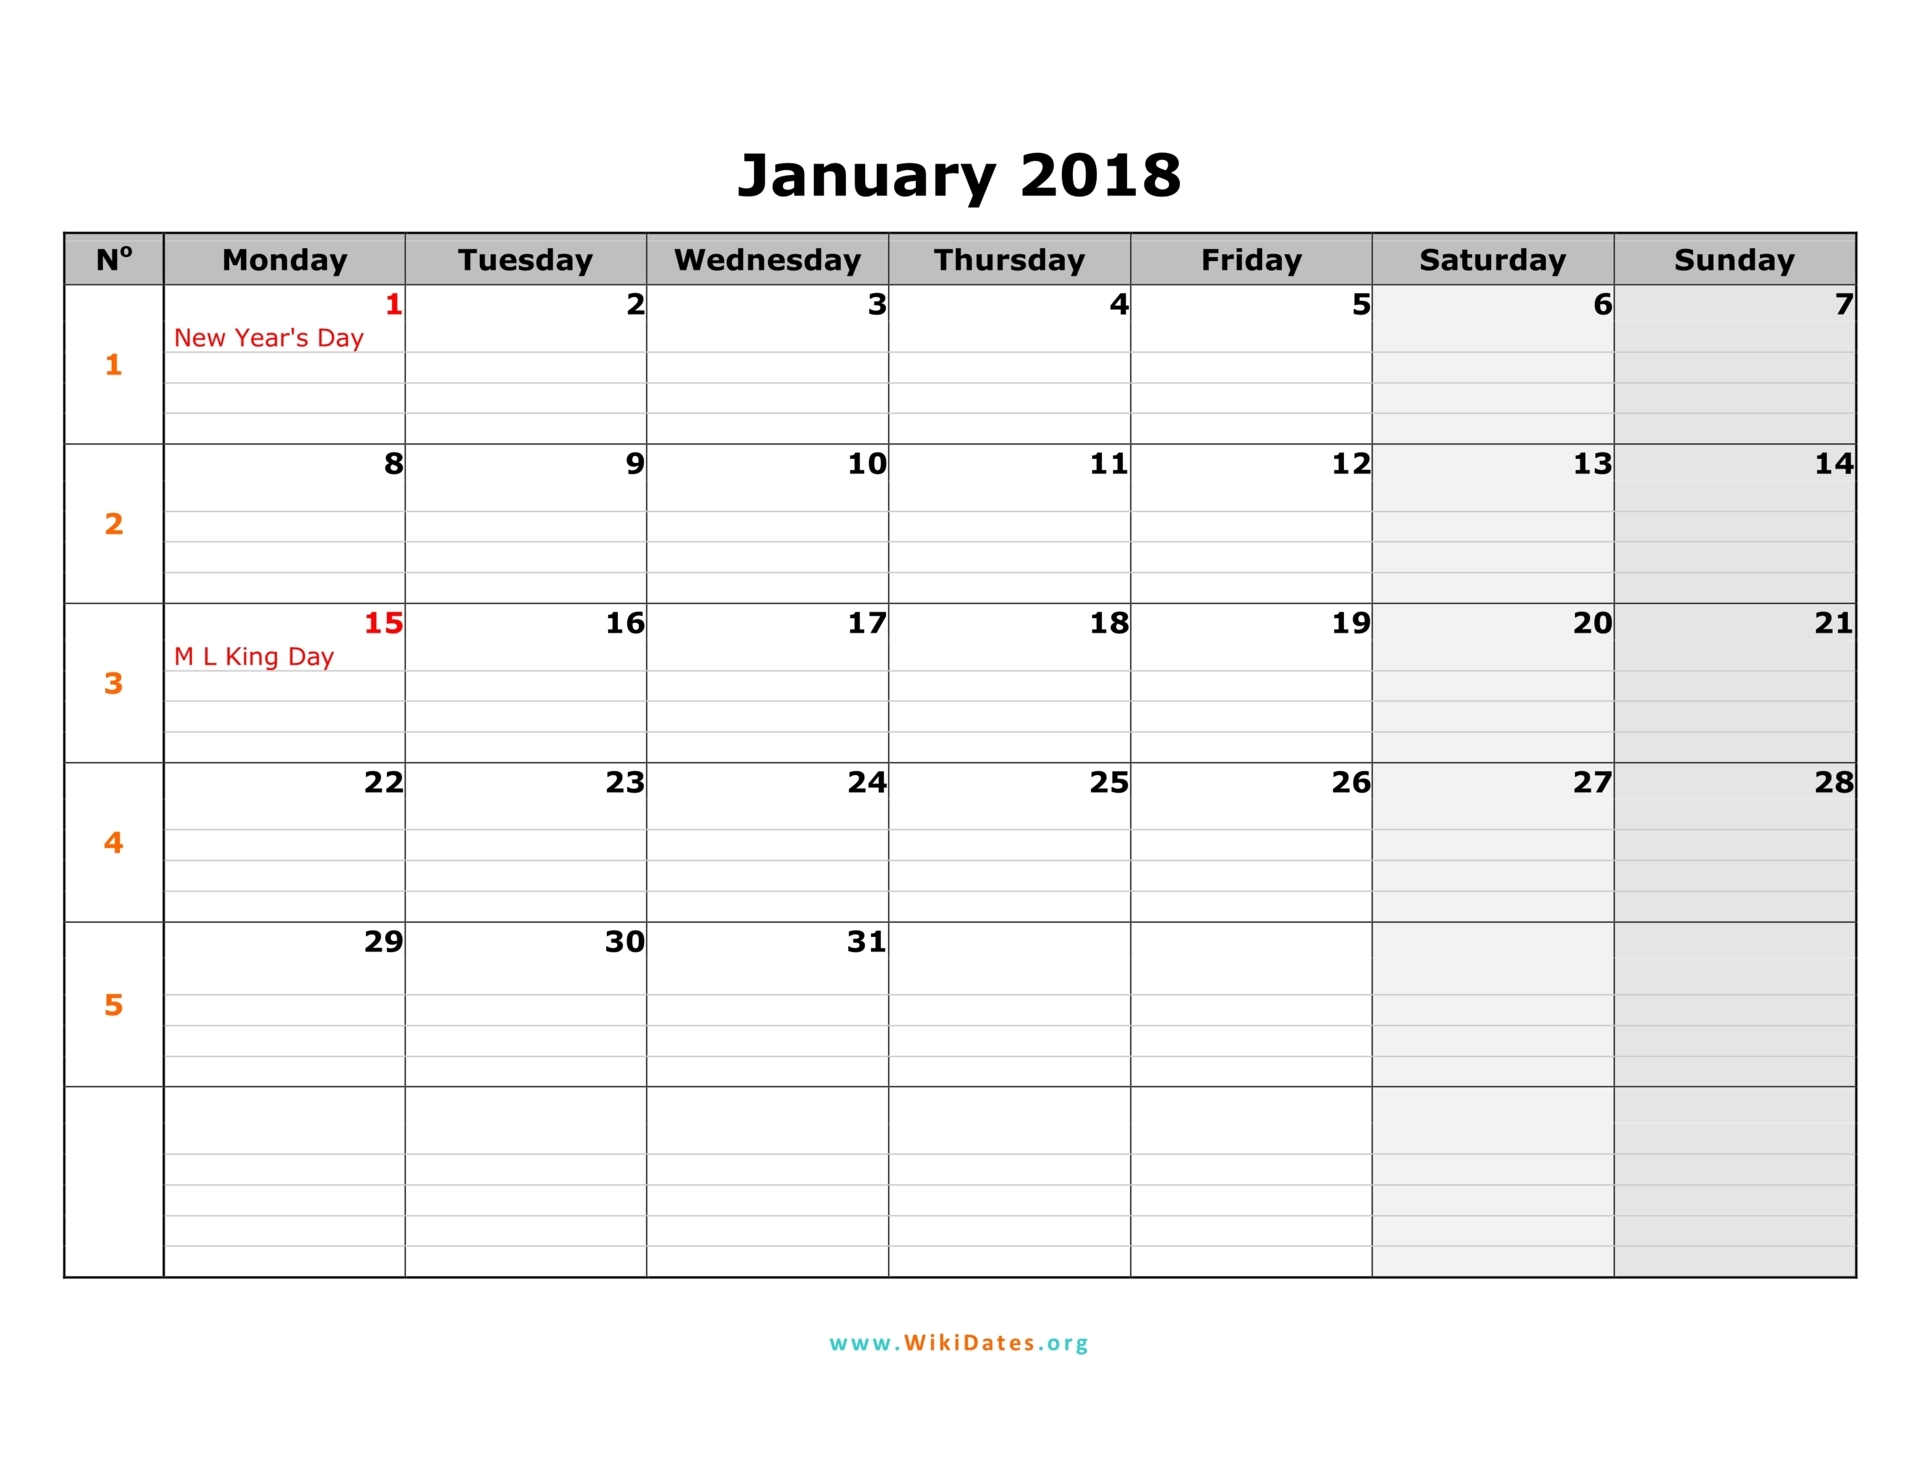 january-2018-calendar-wikidates